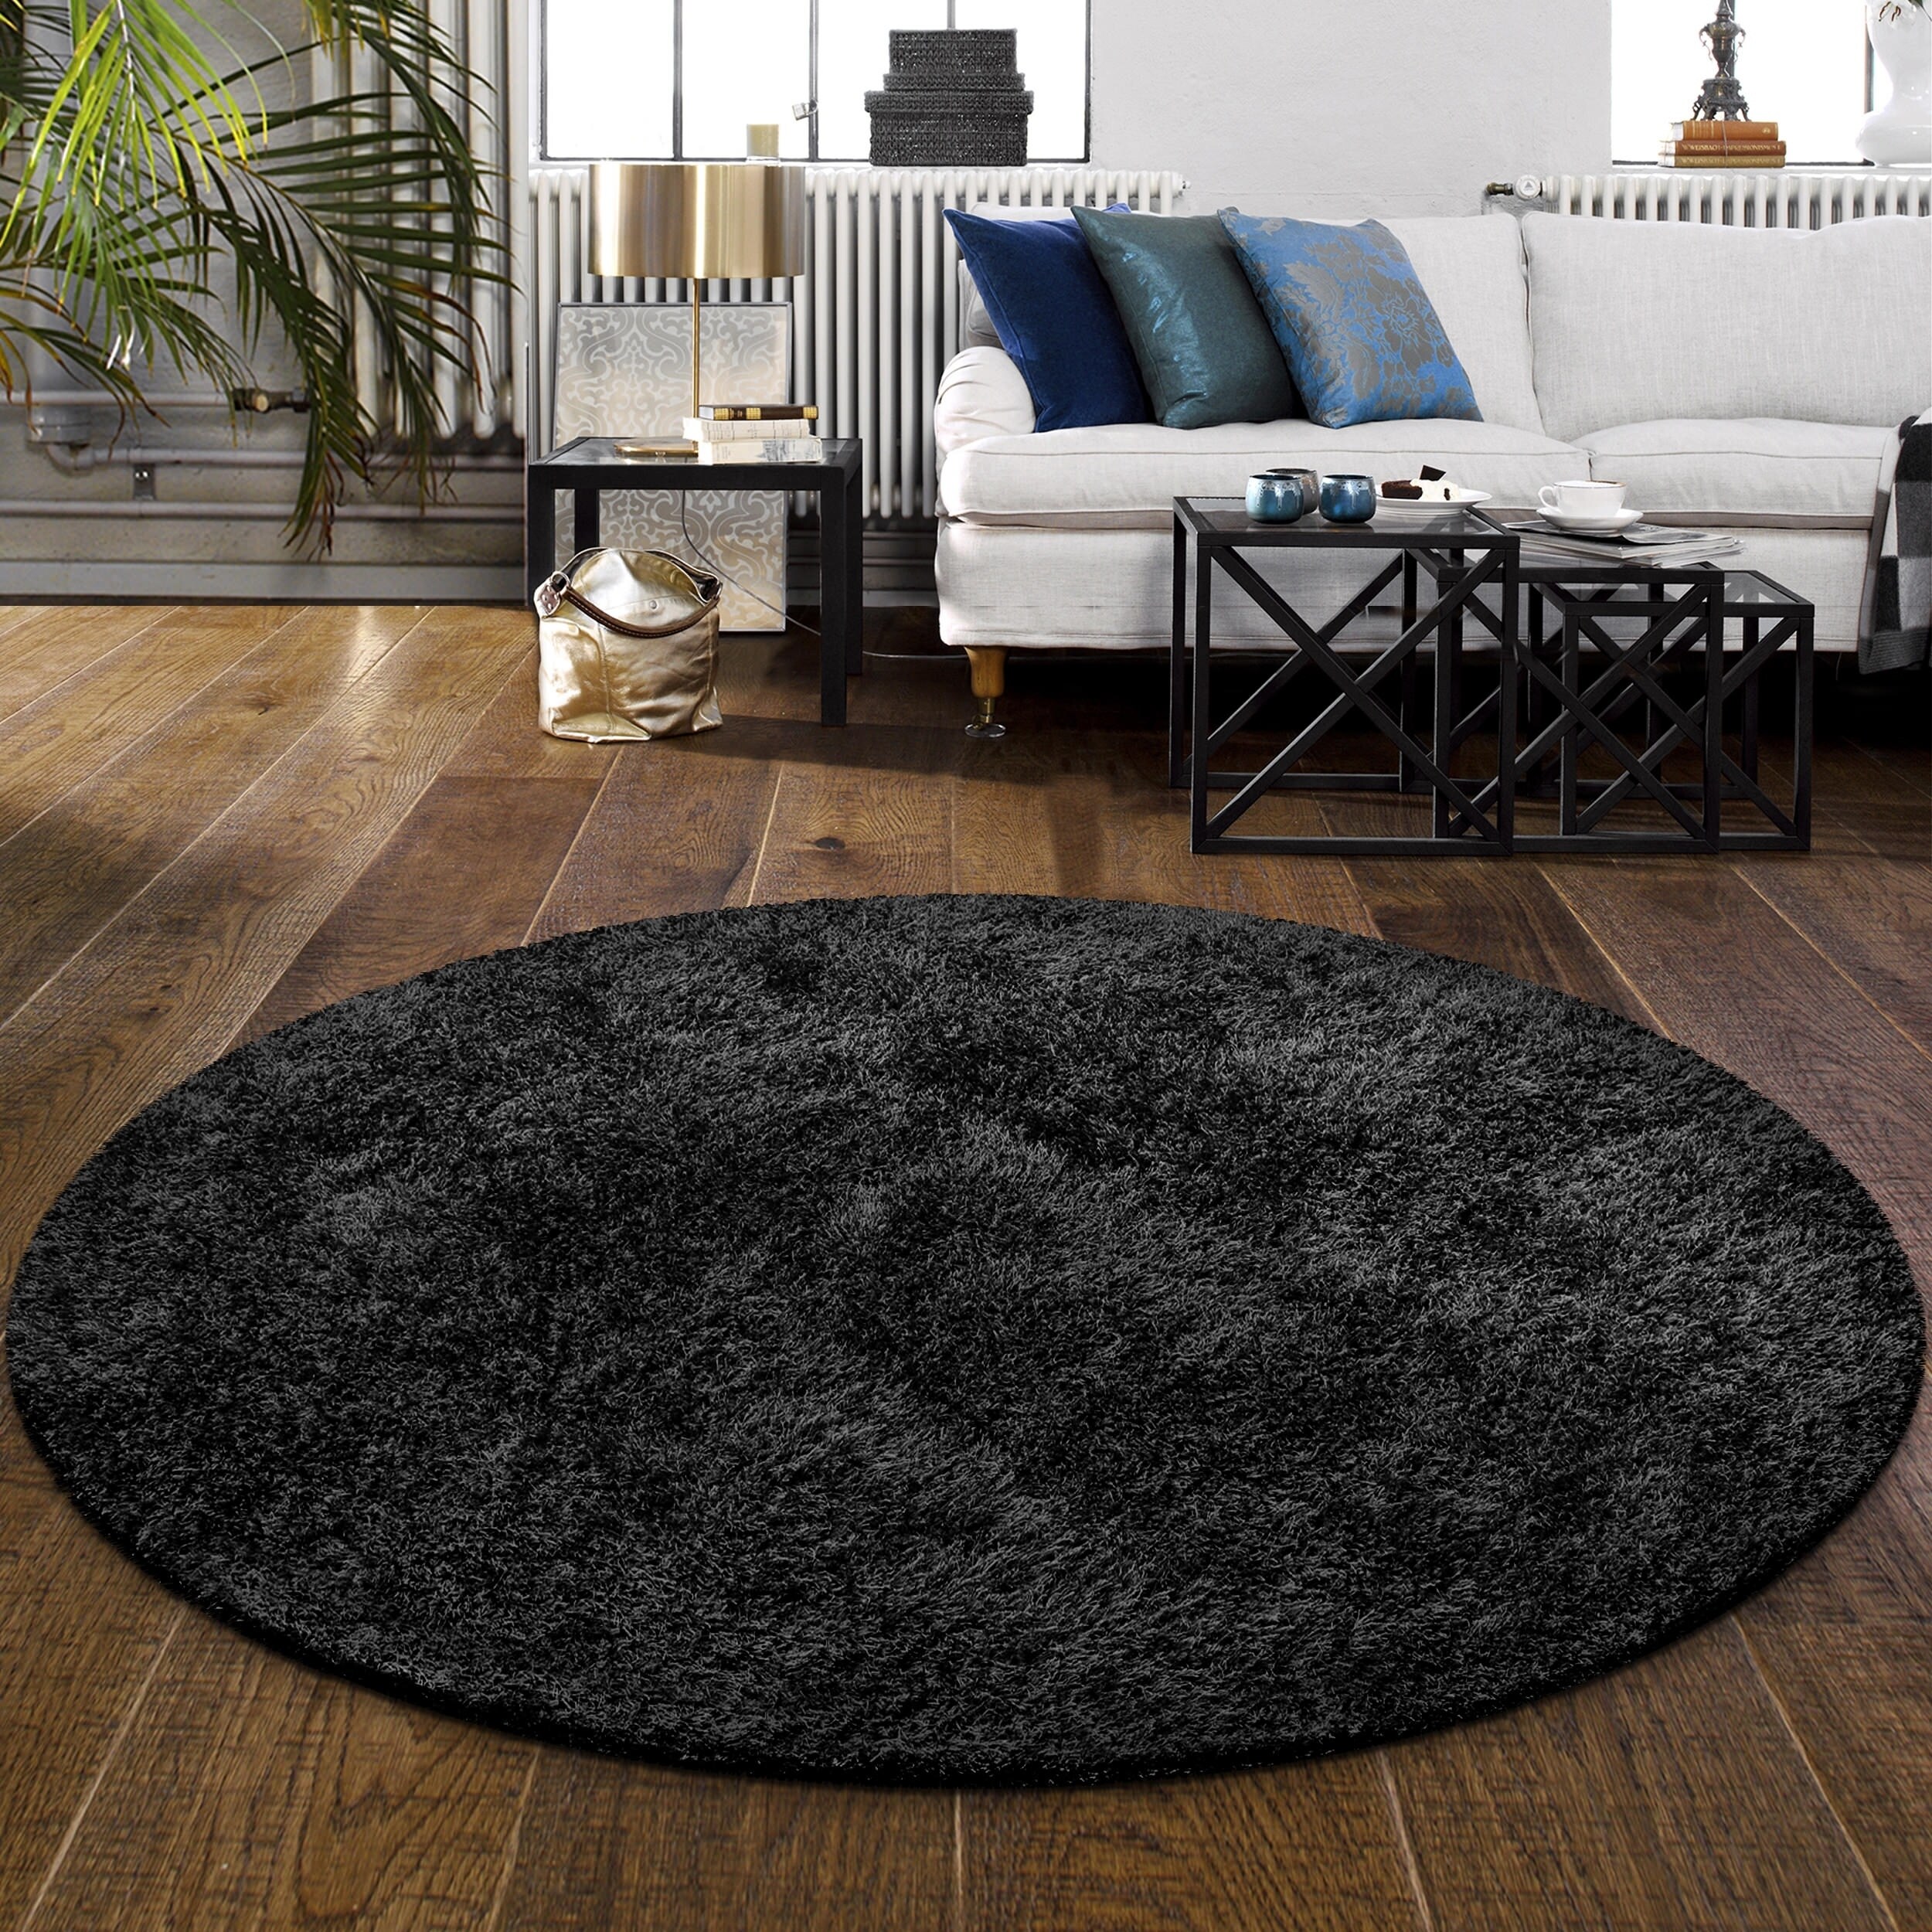 black fuzzy rug